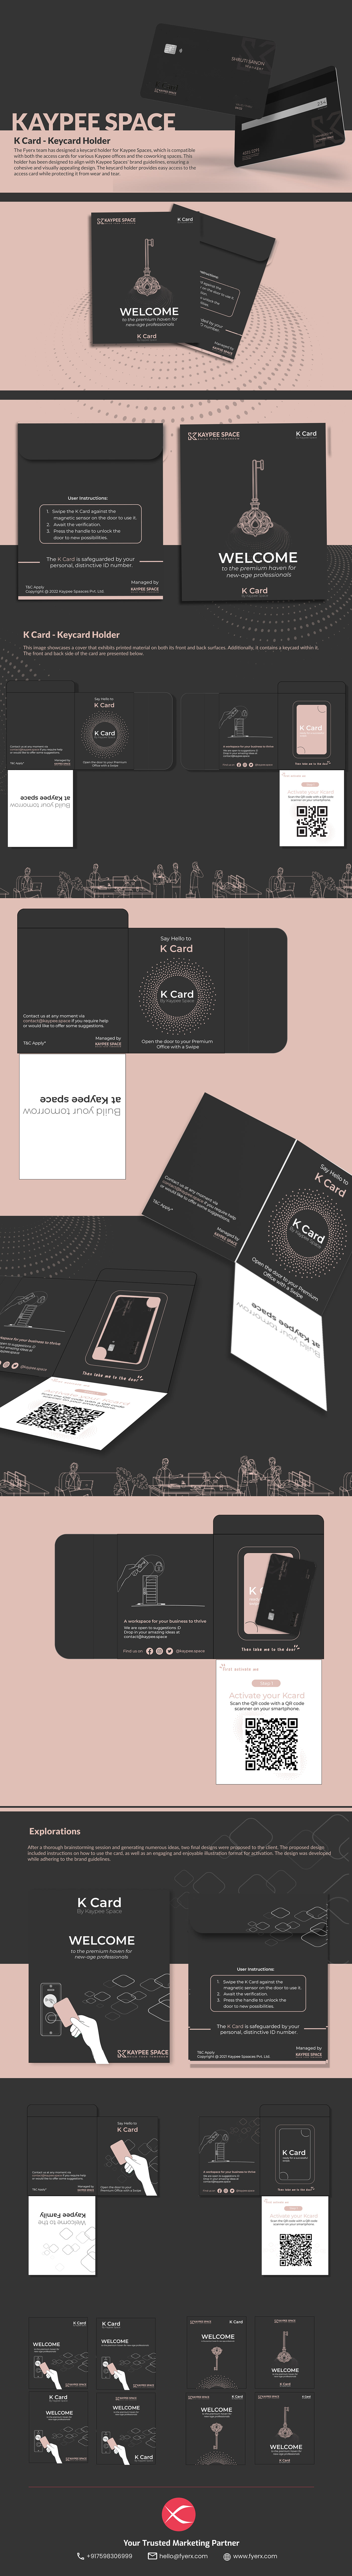 corporate coworking space identity Keycard presentation visual identity design smart card swipe card